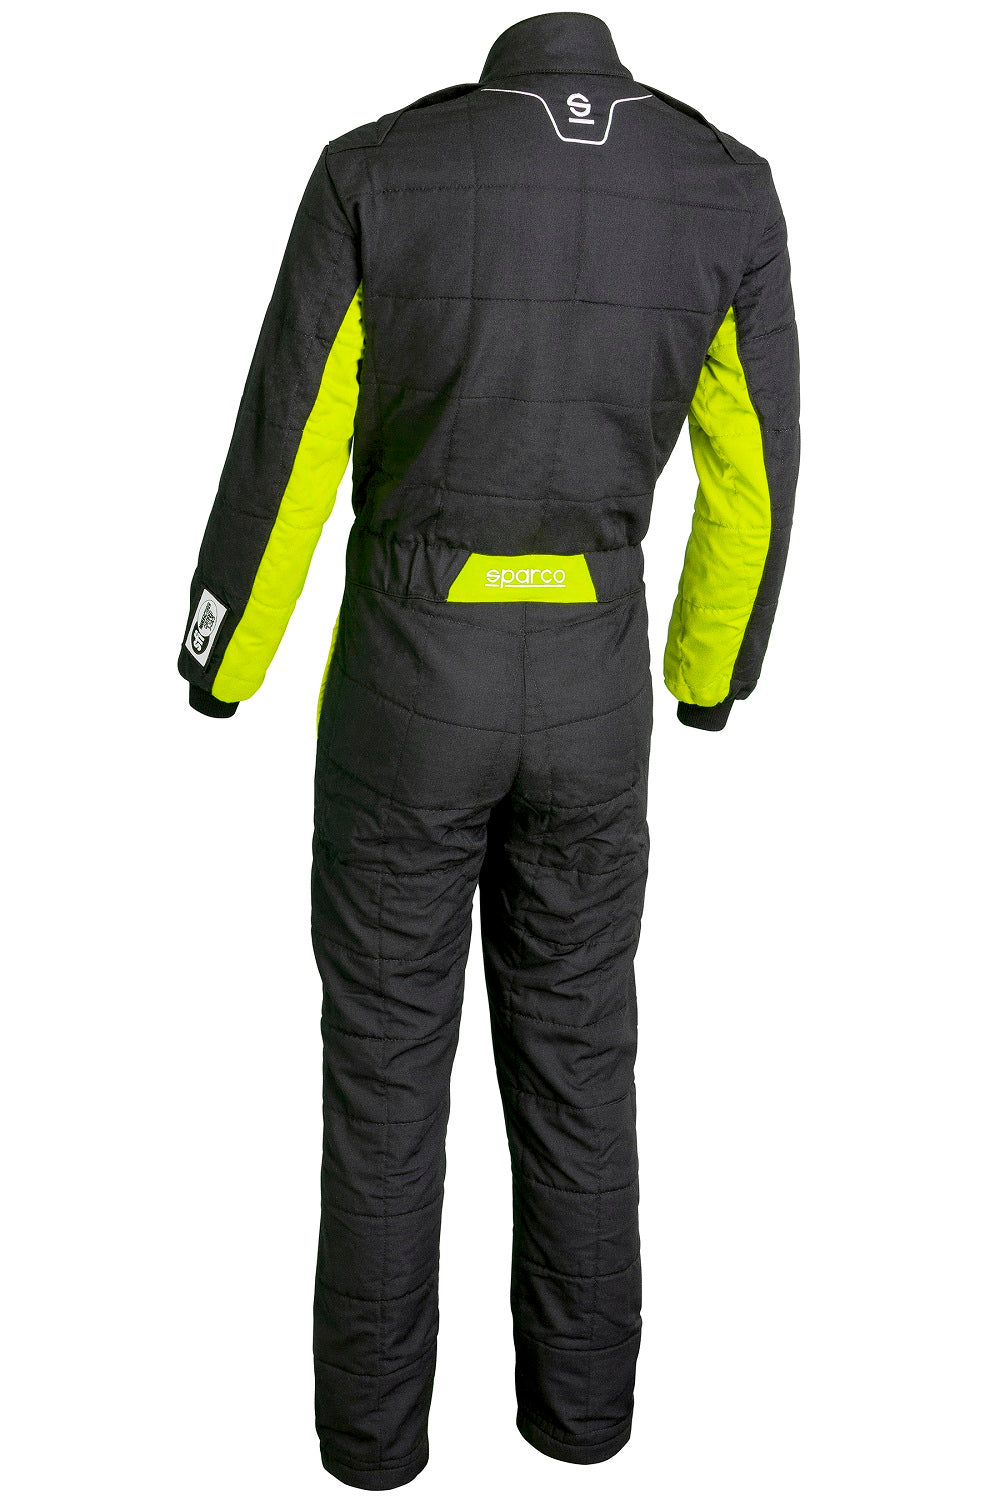 Sparco Conquest 3.0 Race Suit Black / Yellow Rear Image